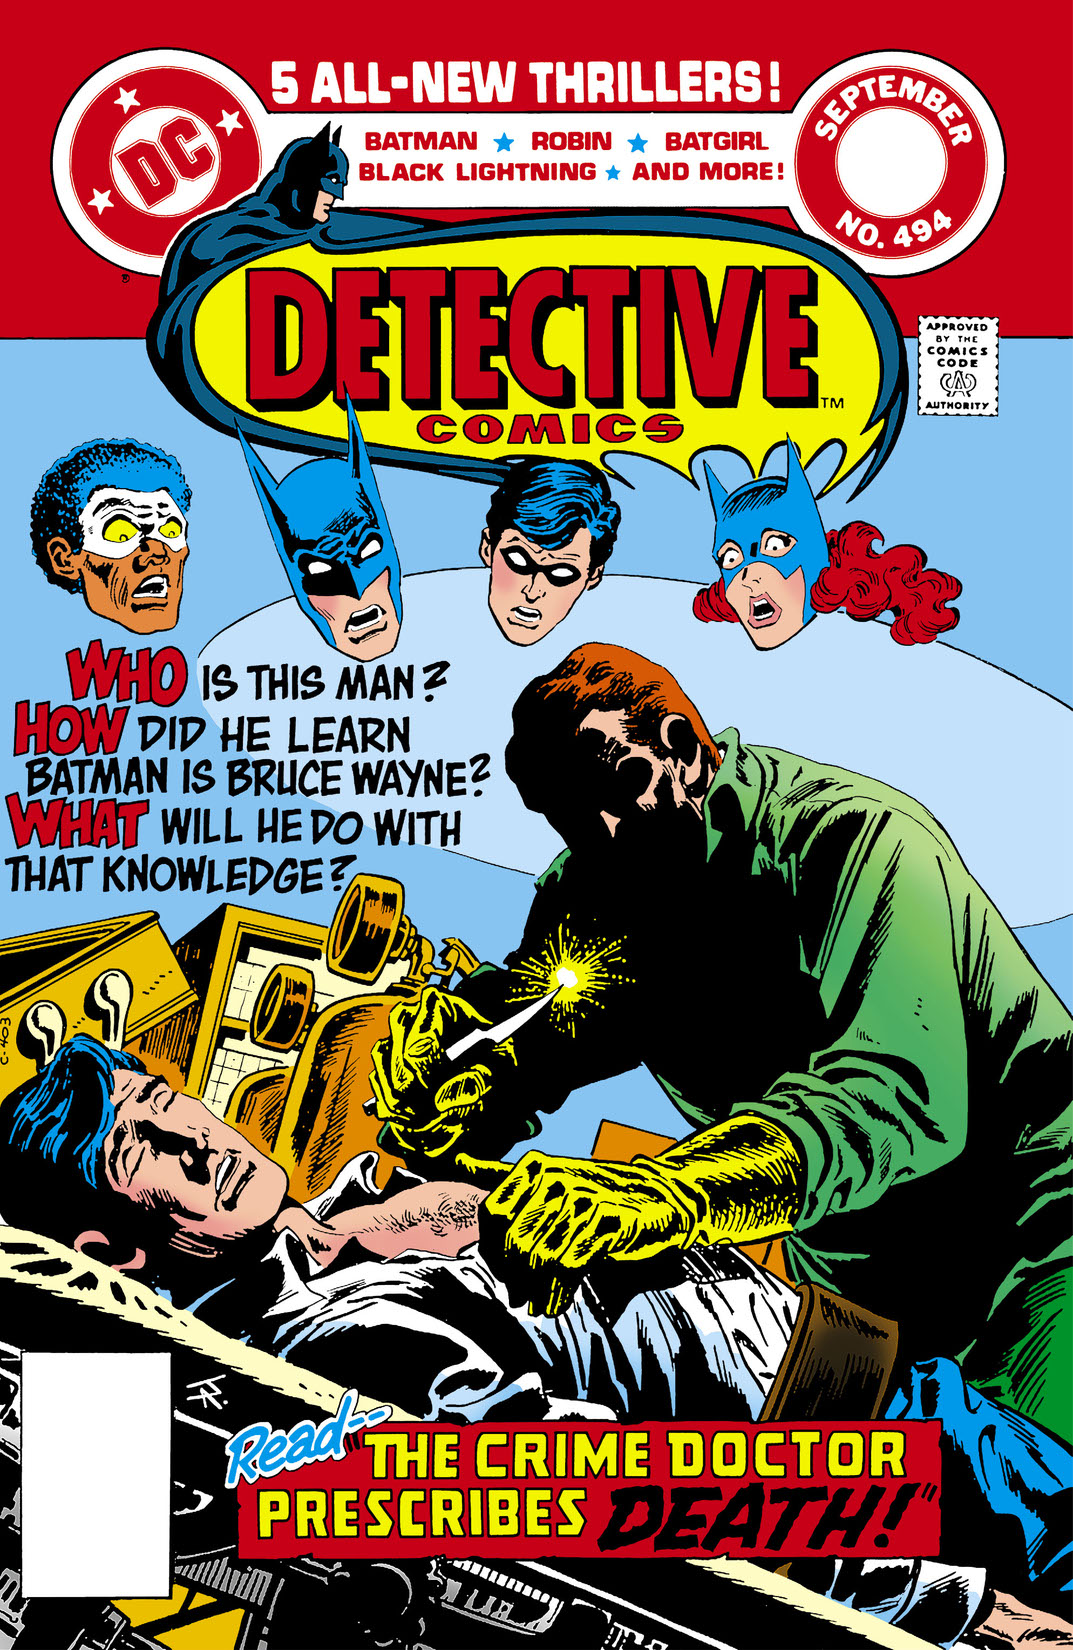 Detective Comics (1937-) #494 preview images